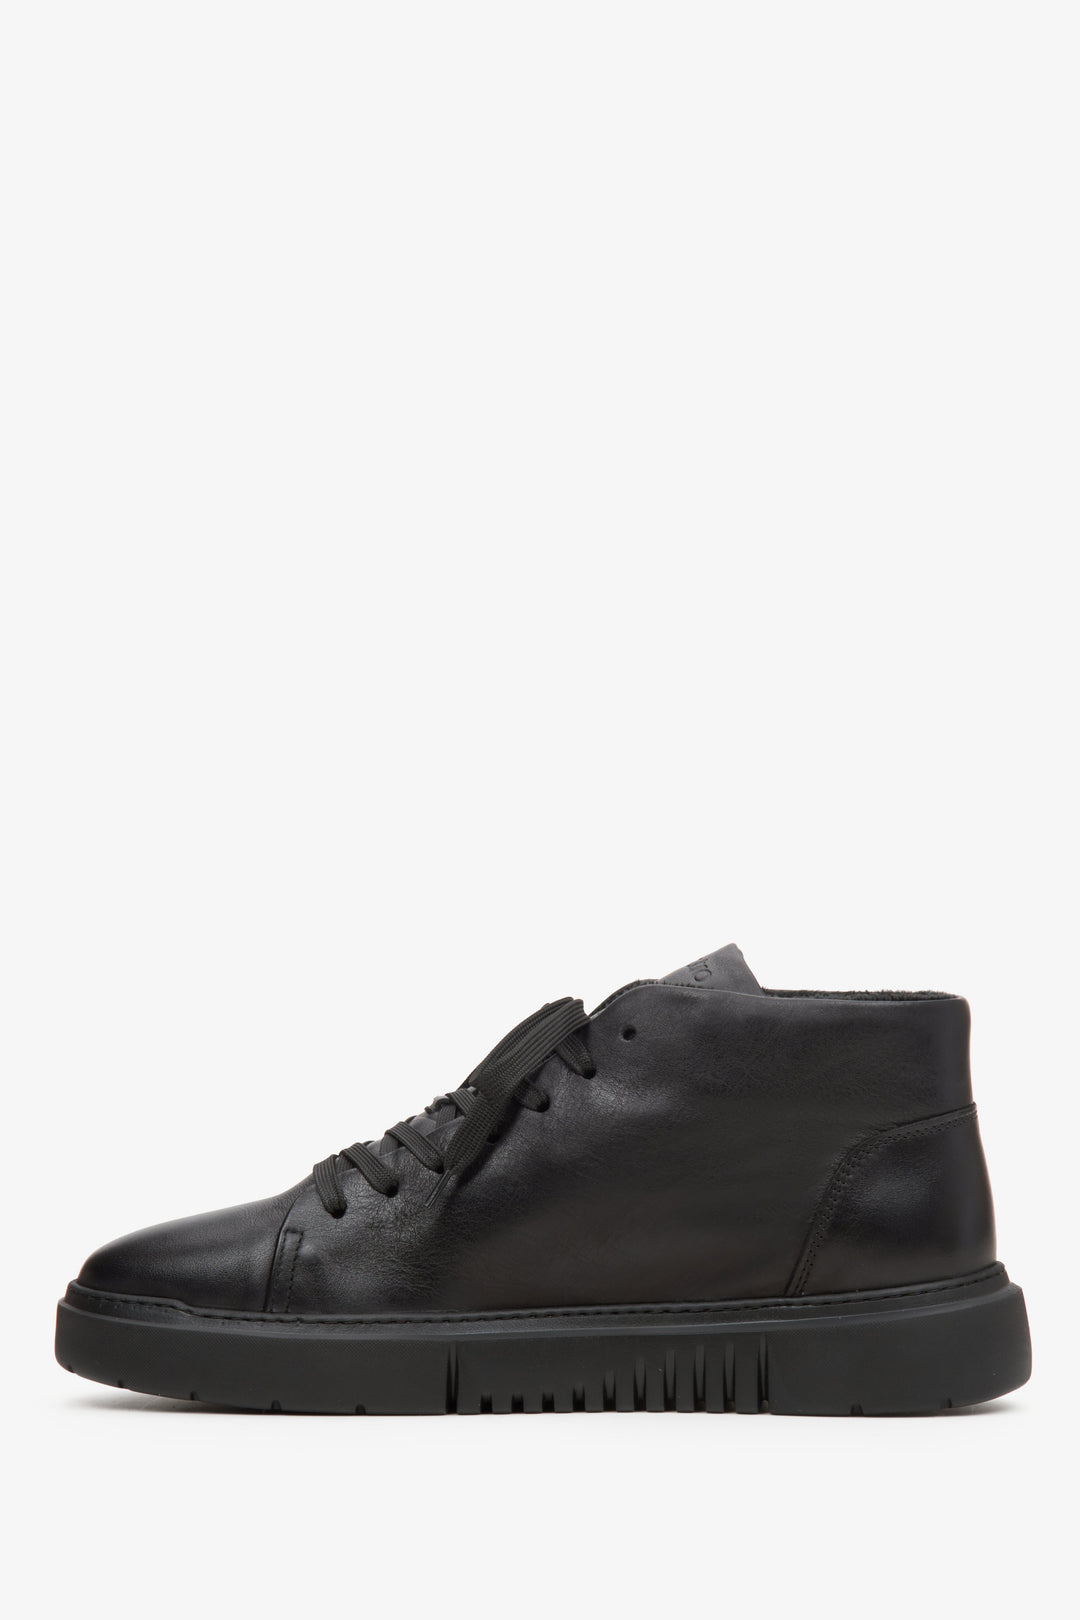 Men's high-top Estro sneakers in black - shoe profile.